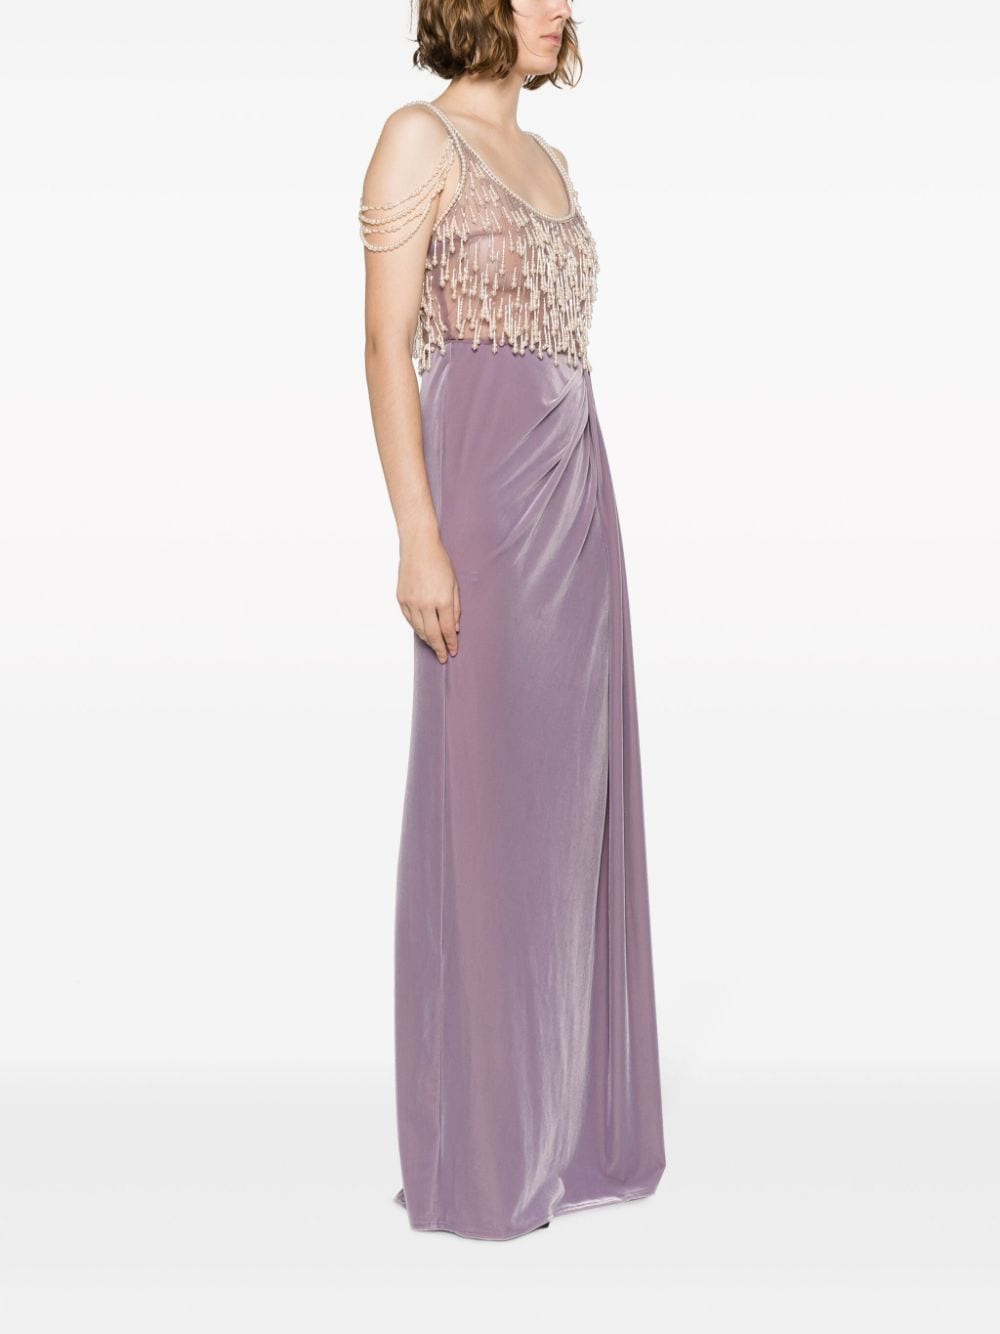 FW23长款紫罗兰色女士连衣裙